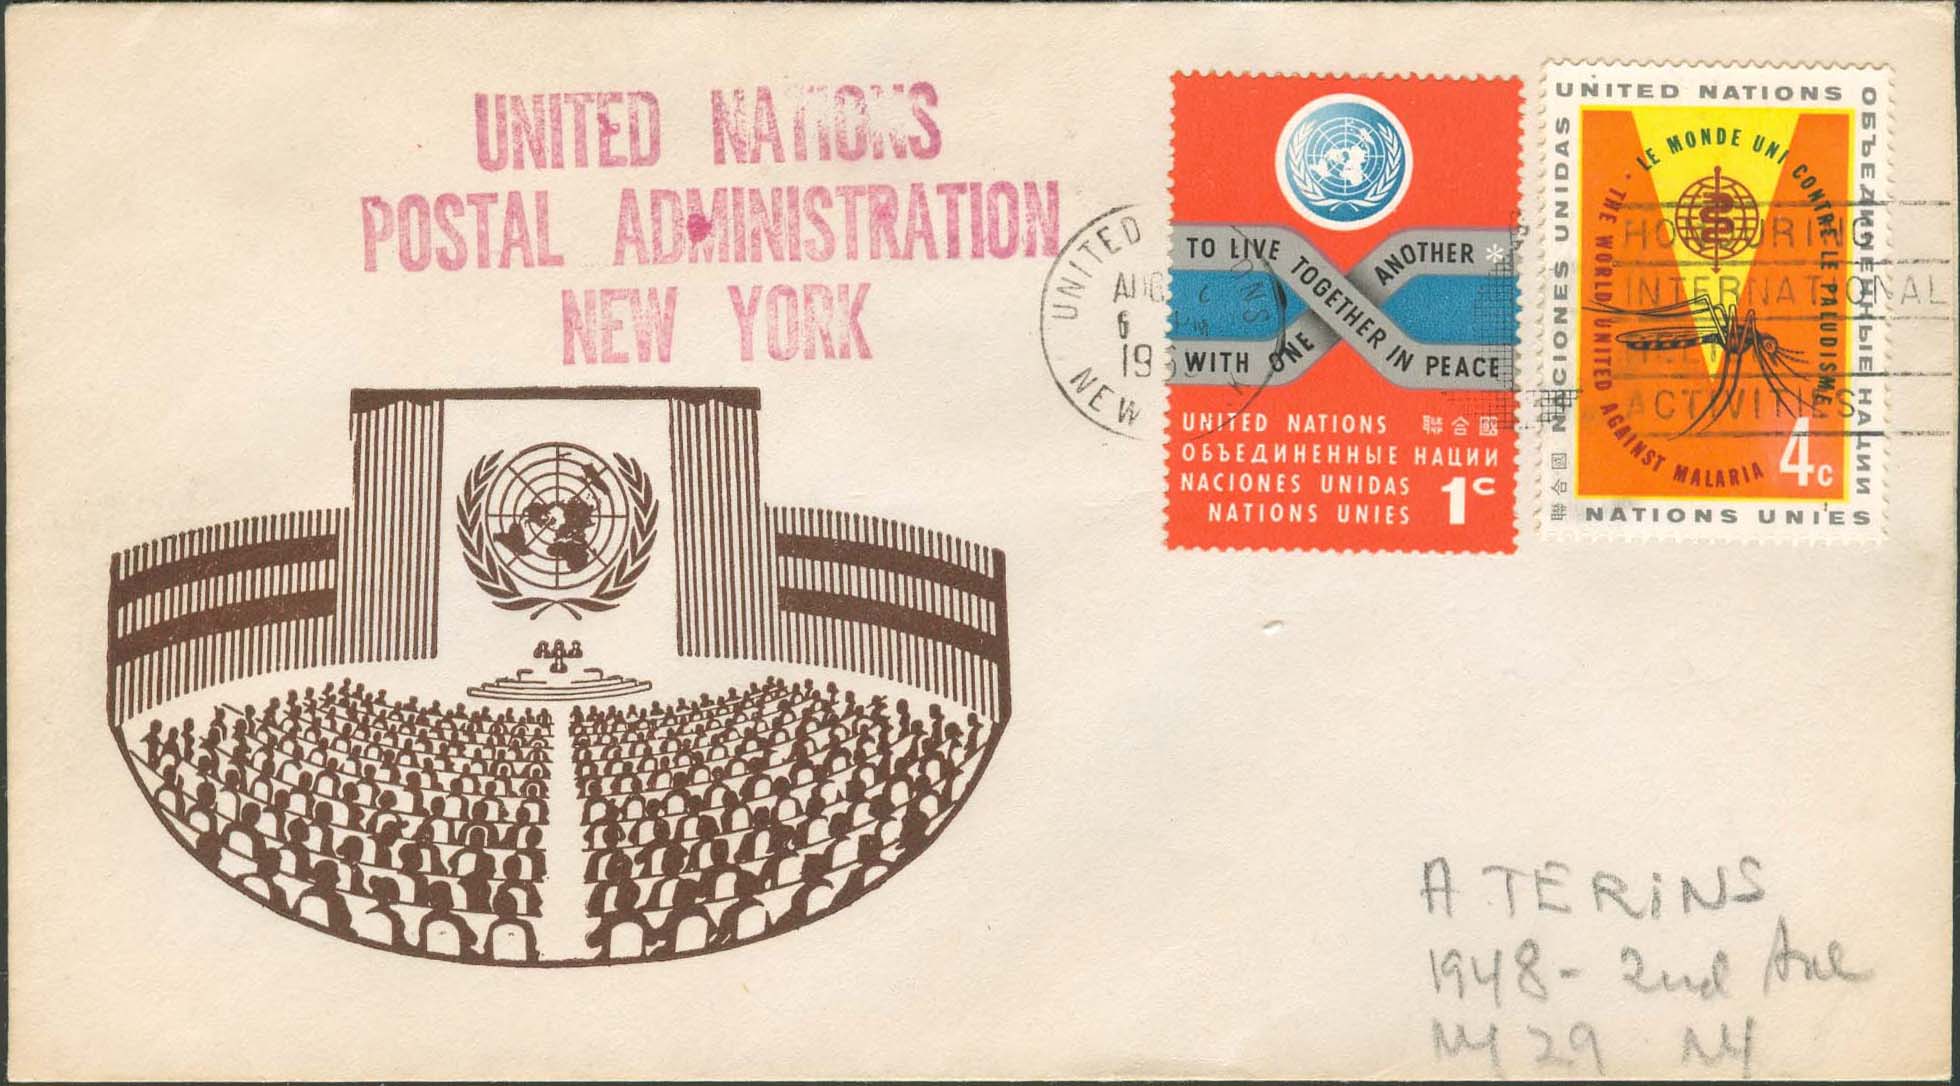 Scott 102 1st print - August 2, 1963<br />Machine slogan cancel "Honoring Relief Activities"<br />UN Postal Administration rubber stamped return address